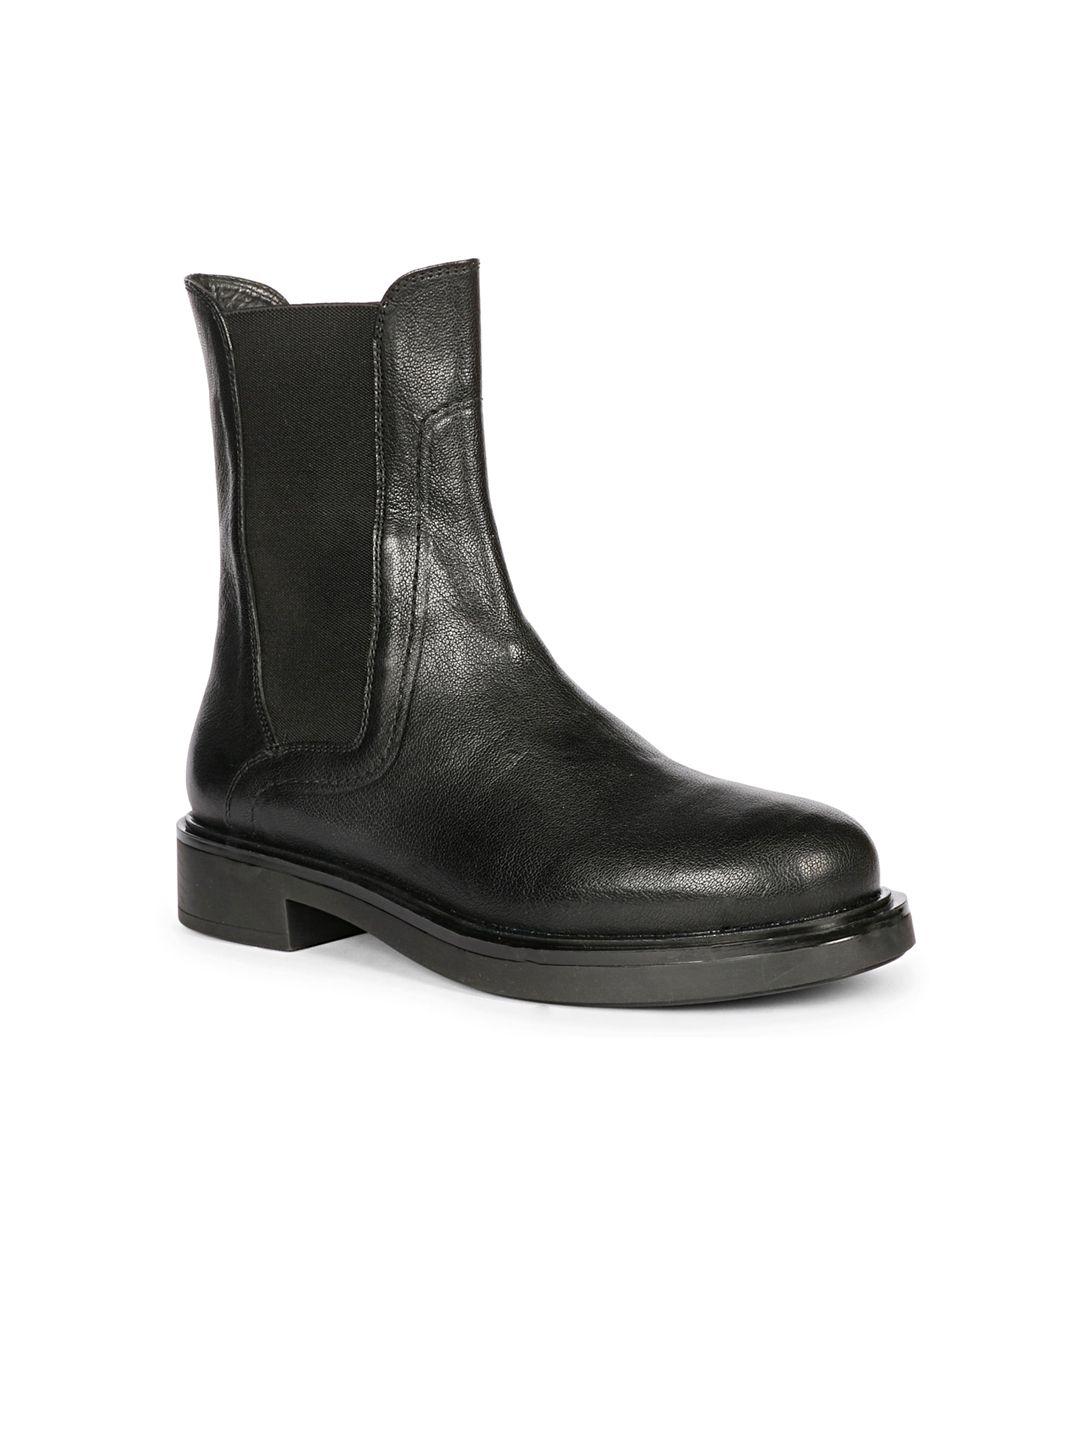 saint-g-women-mid-top-genuine-leather-chelsea-boots